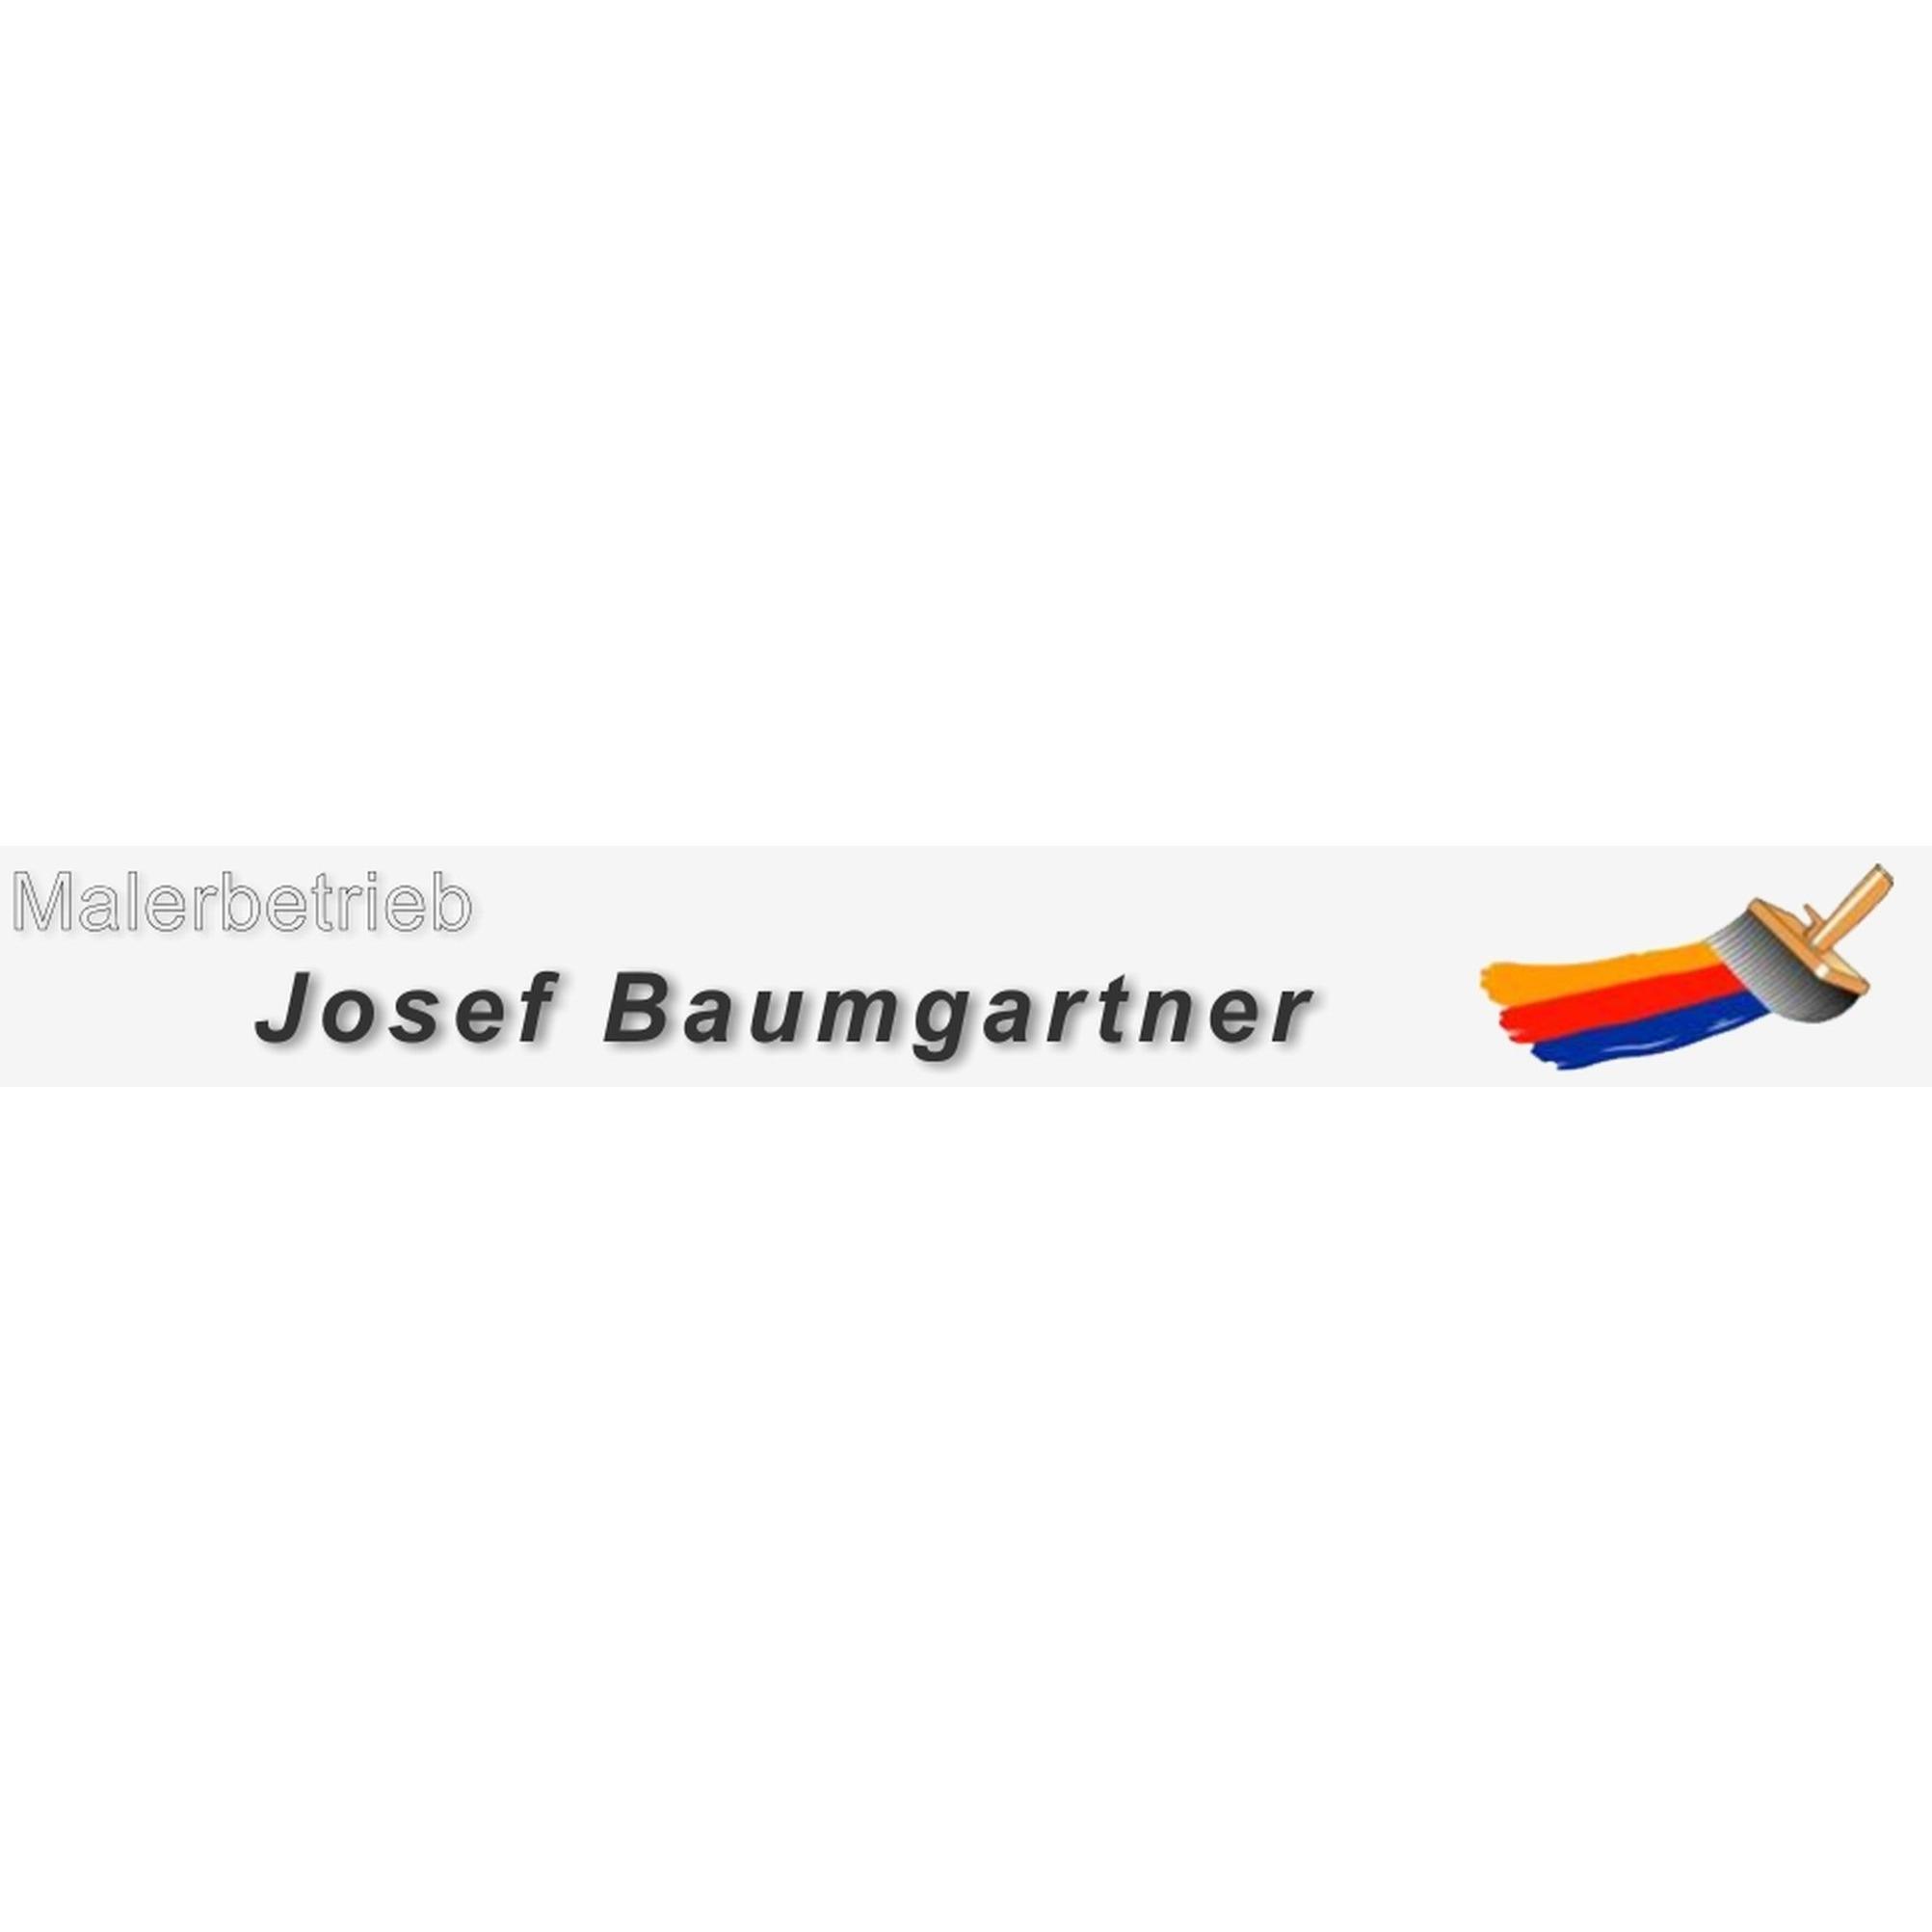 Baumgartner Josef - Malerbetrieb Logo